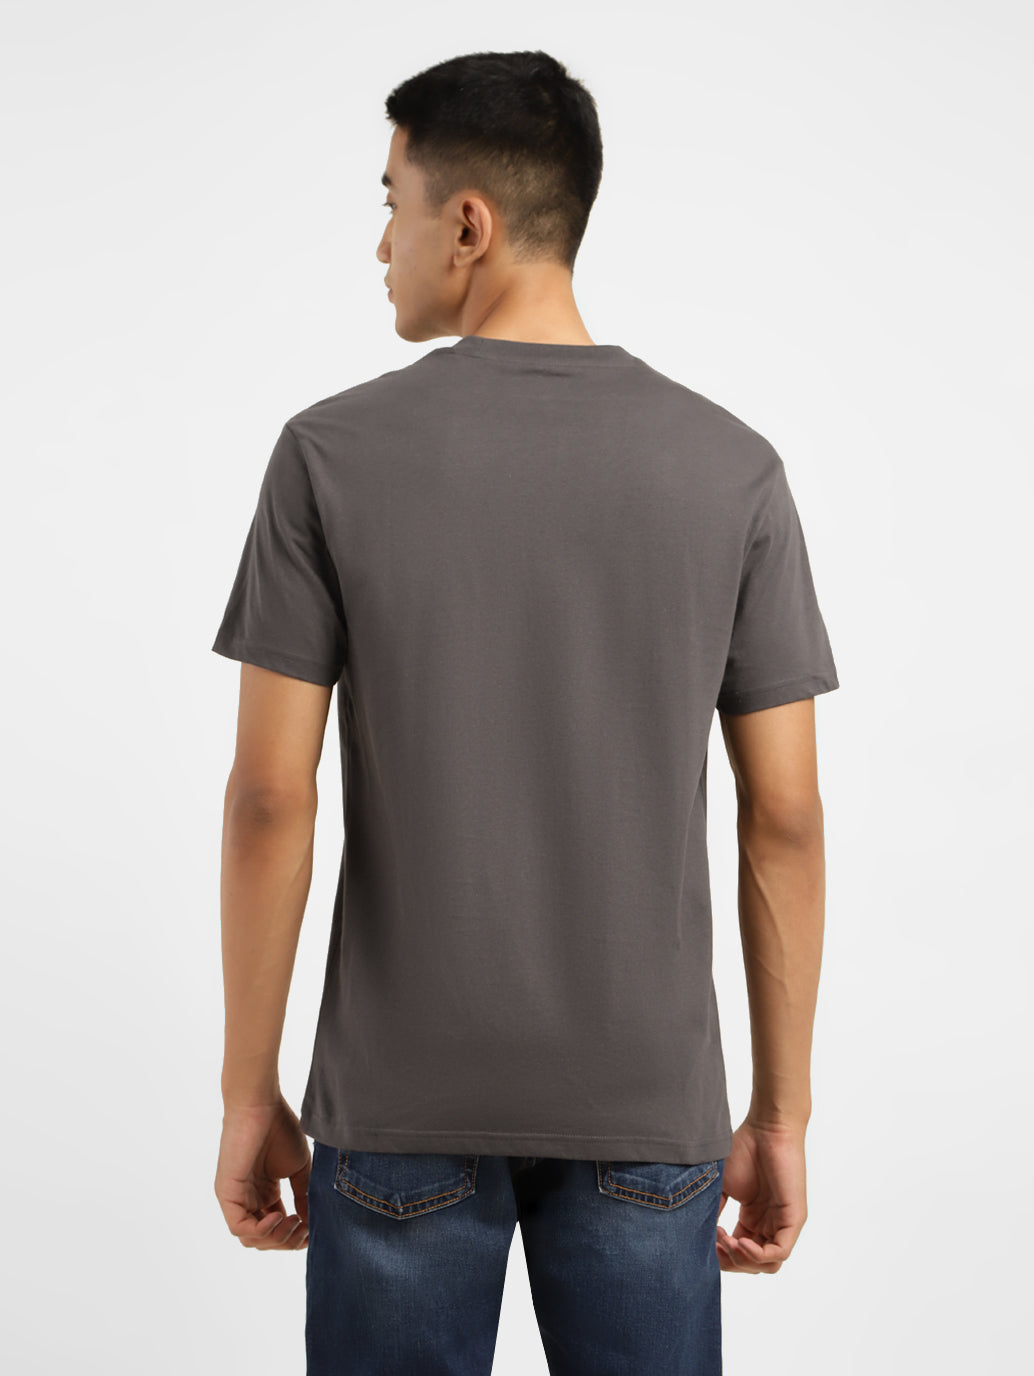 Men's Graphic Print Crew Neck T-shirt Grey